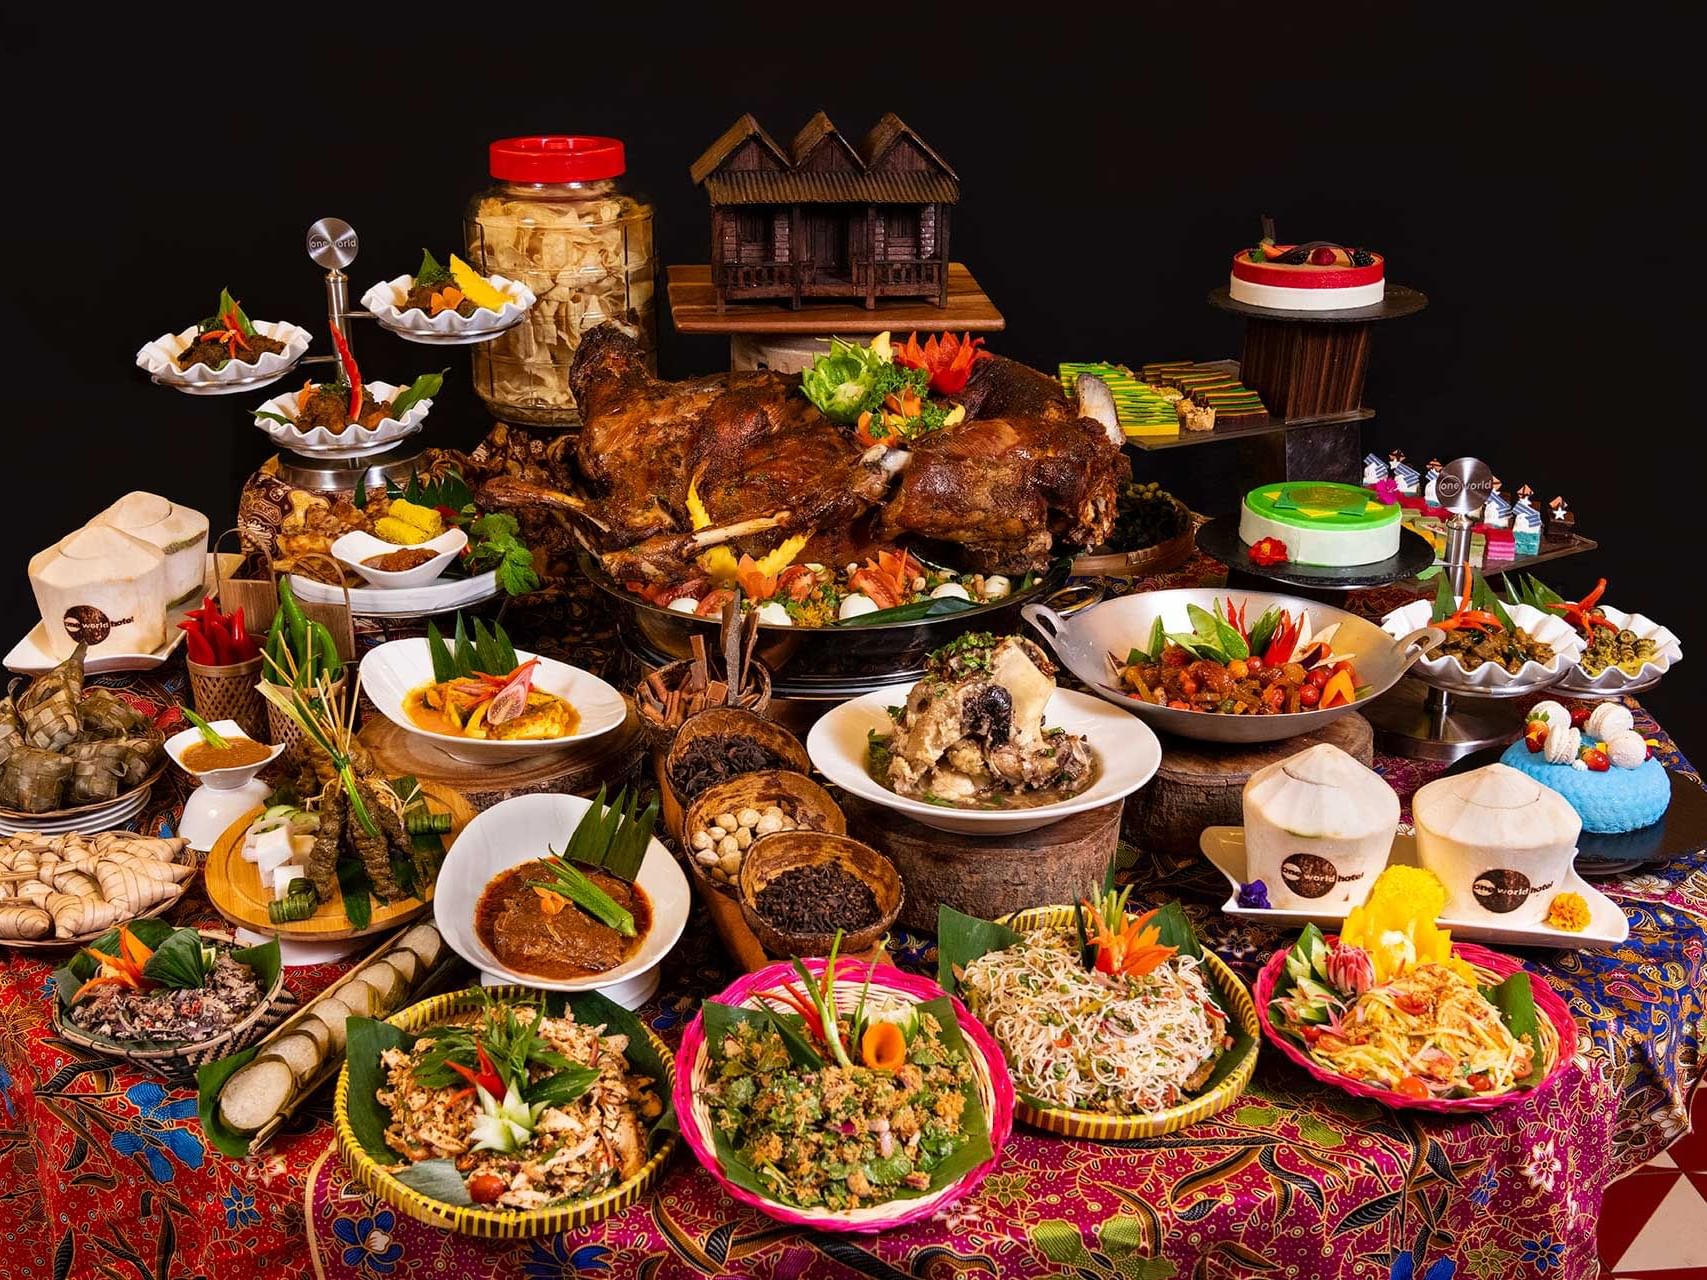 Seribu Satu Rasa Buffet Dinner featuring a variety of food dishes at One World Hotel